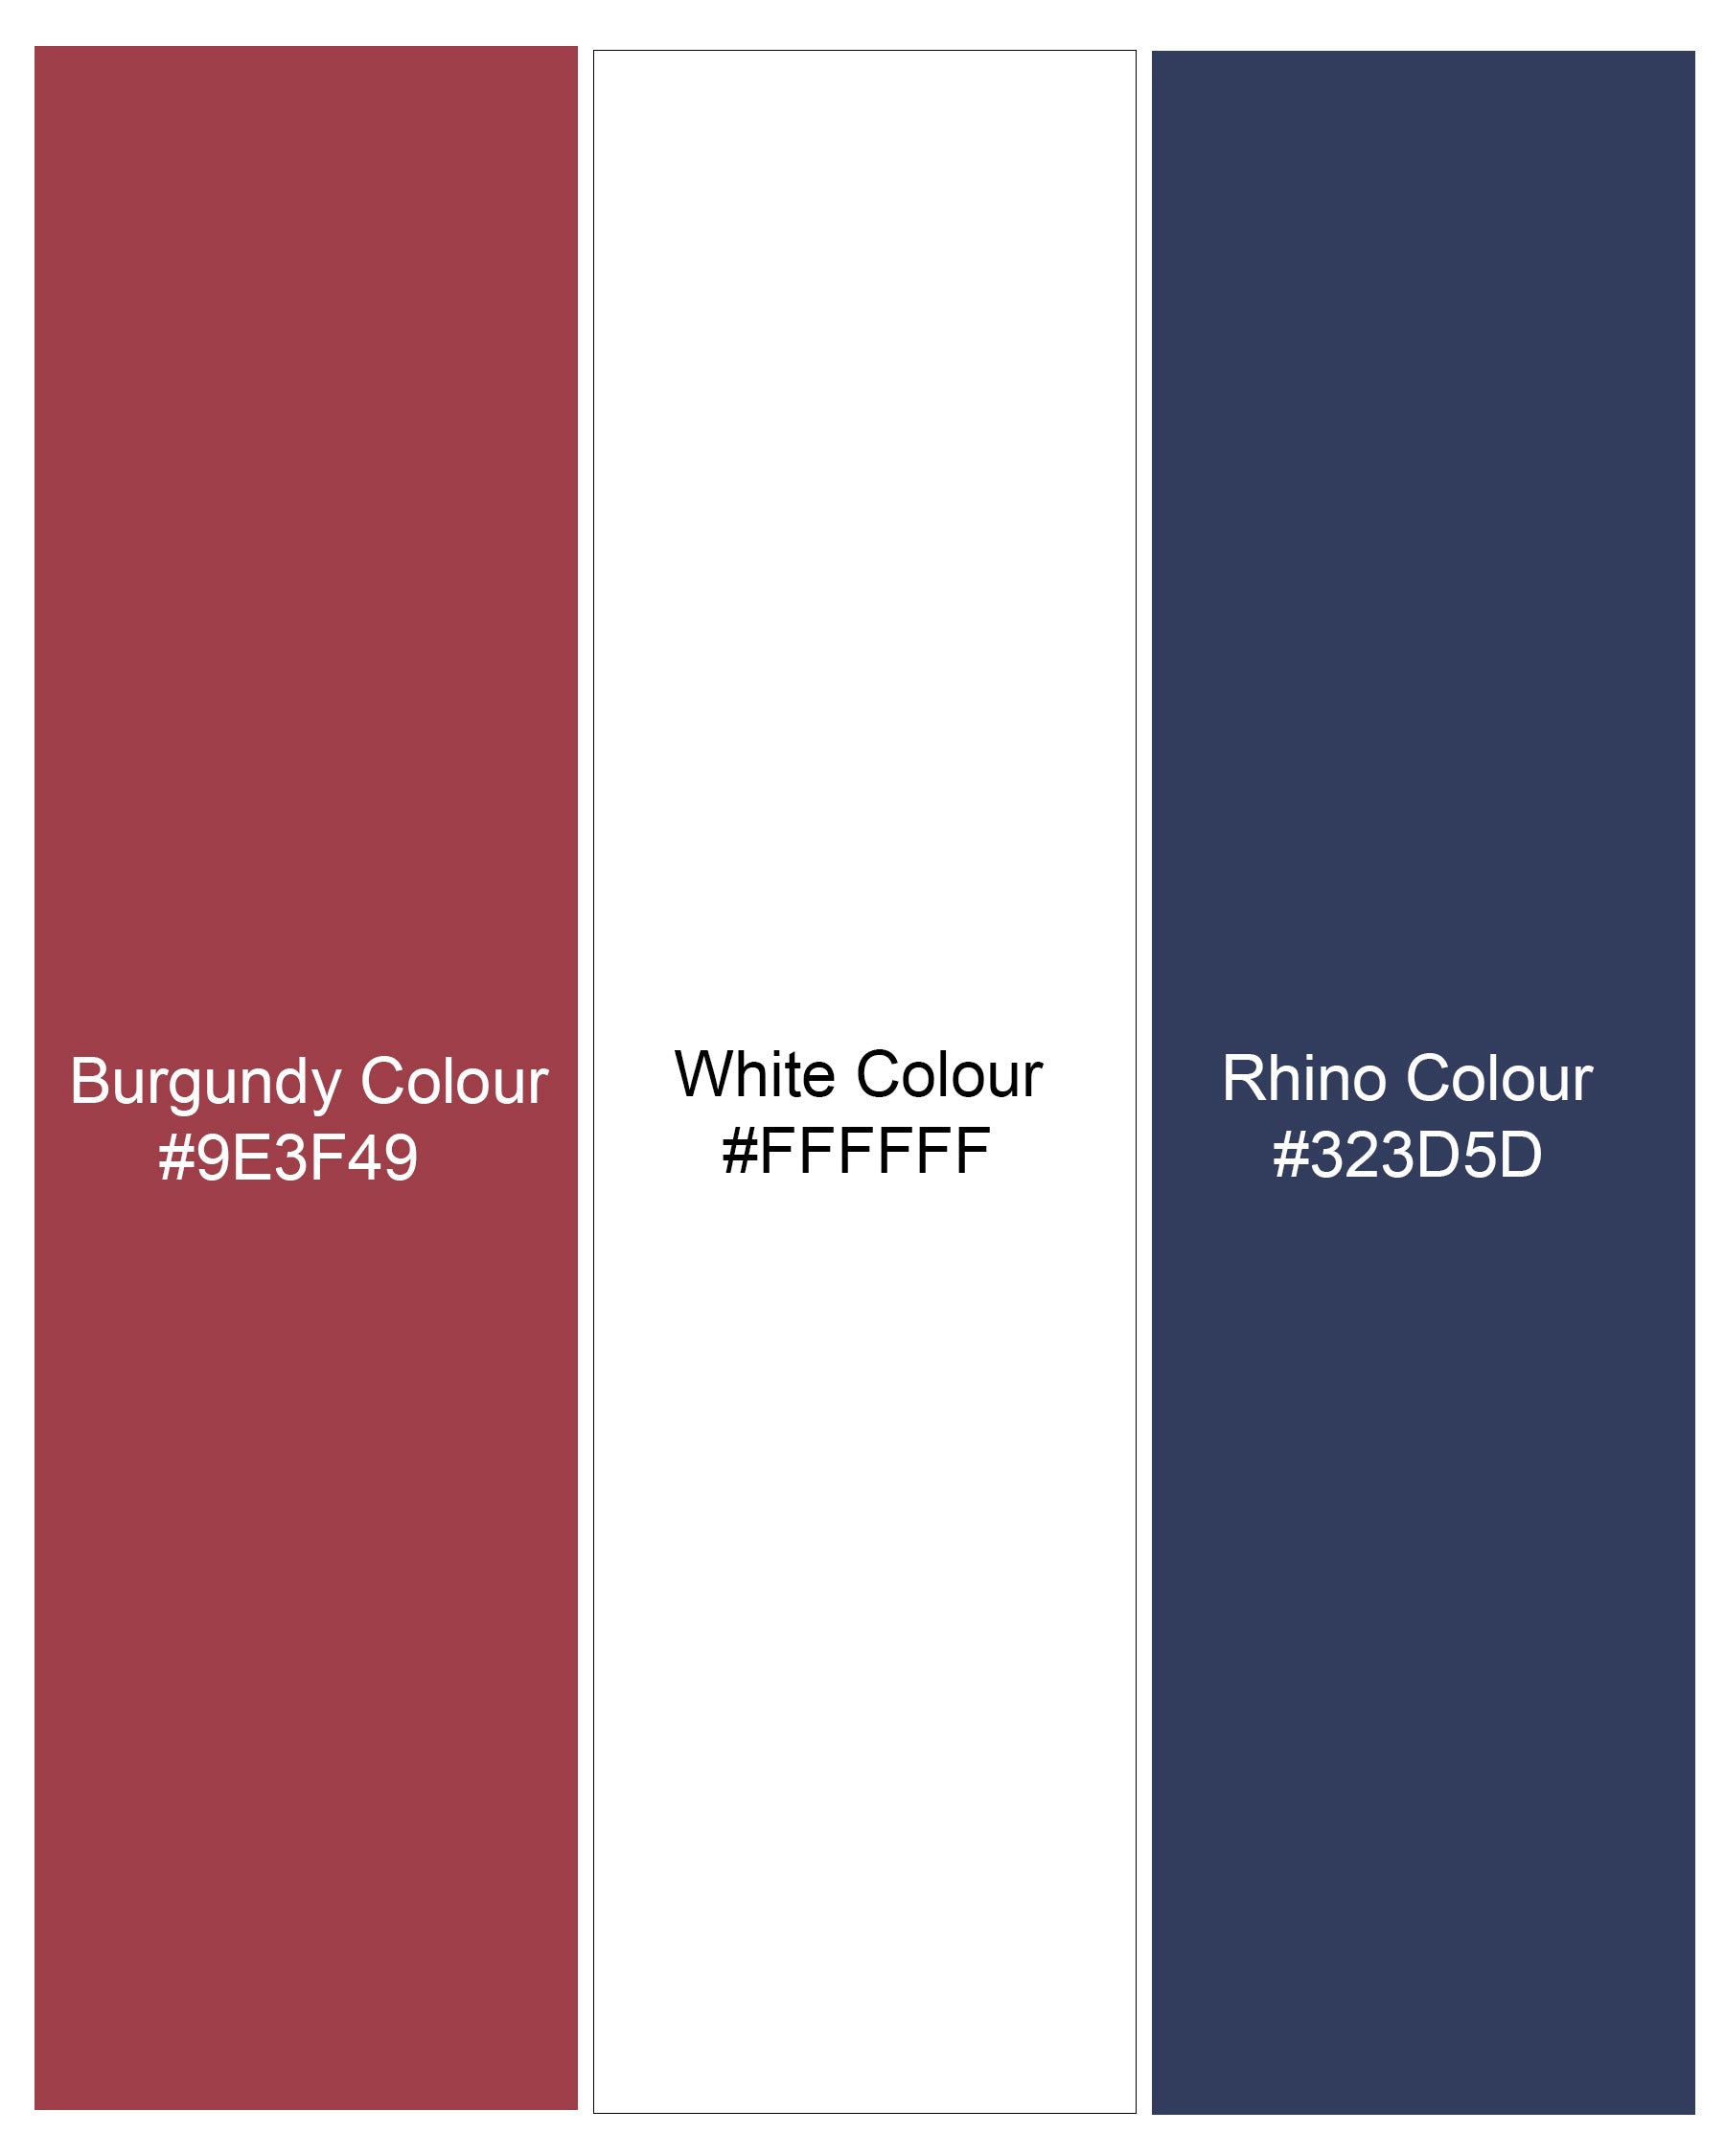 Burgundy with Bright White and Rhino Blue Checked Premium Cotton Shirt 8432-38, 8432-H-38, 8432-39,8432-H-39, 8432-40, 8432-H-40, 8432-42, 8432-H-42, 8432-44, 8432-H-44, 8432-46, 8432-H-46, 8432-48, 8432-H-48, 8432-50, 8432-H-50, 8432-52, 8432-H-52